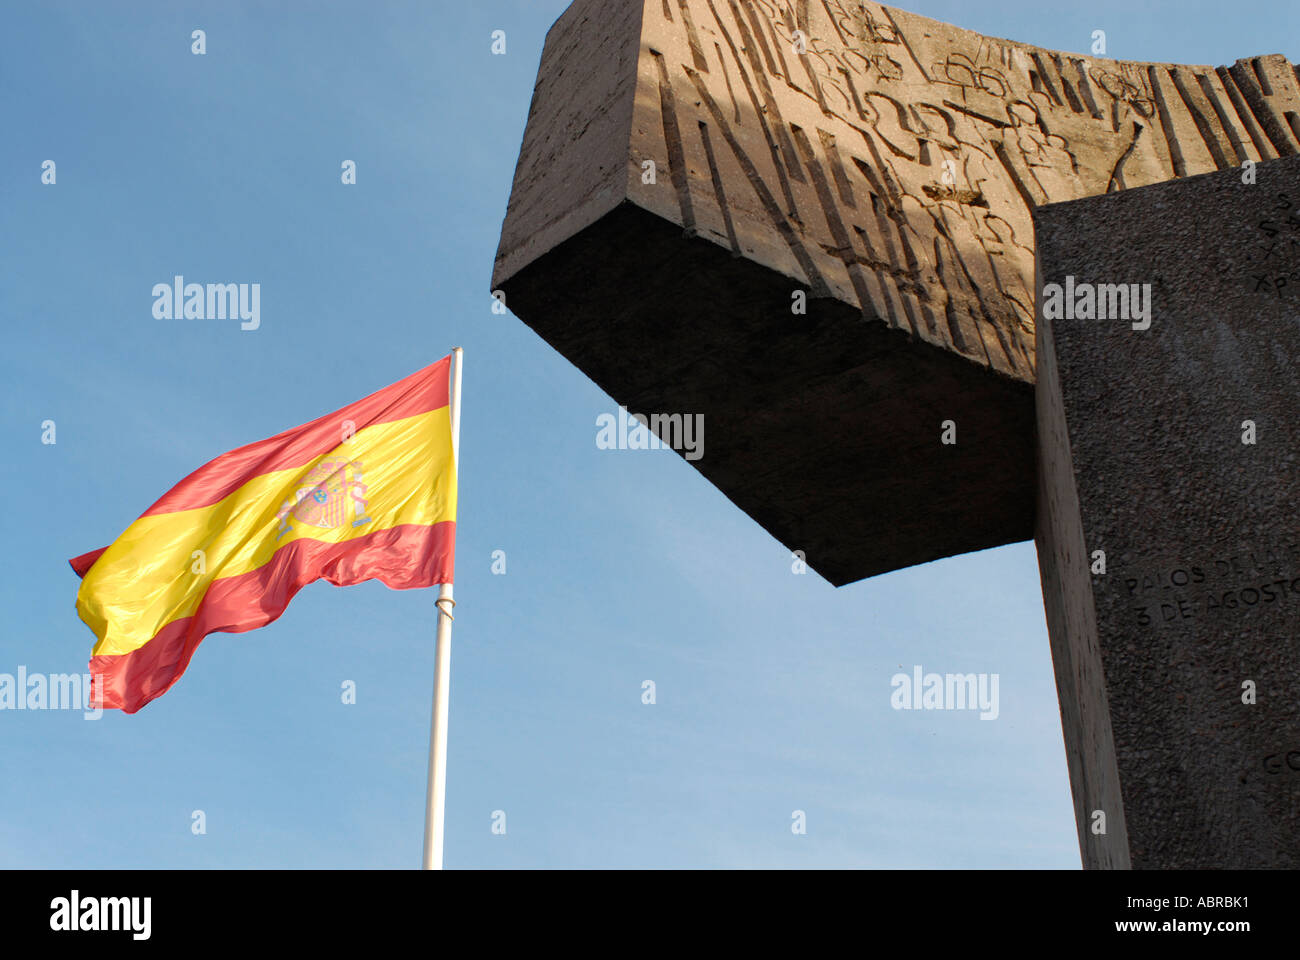 Plaza de Colon or Plaza Colon Madrid with stone sculptures by Joaquin Vaquero Turclo and the Spanish Flag Stock Photo